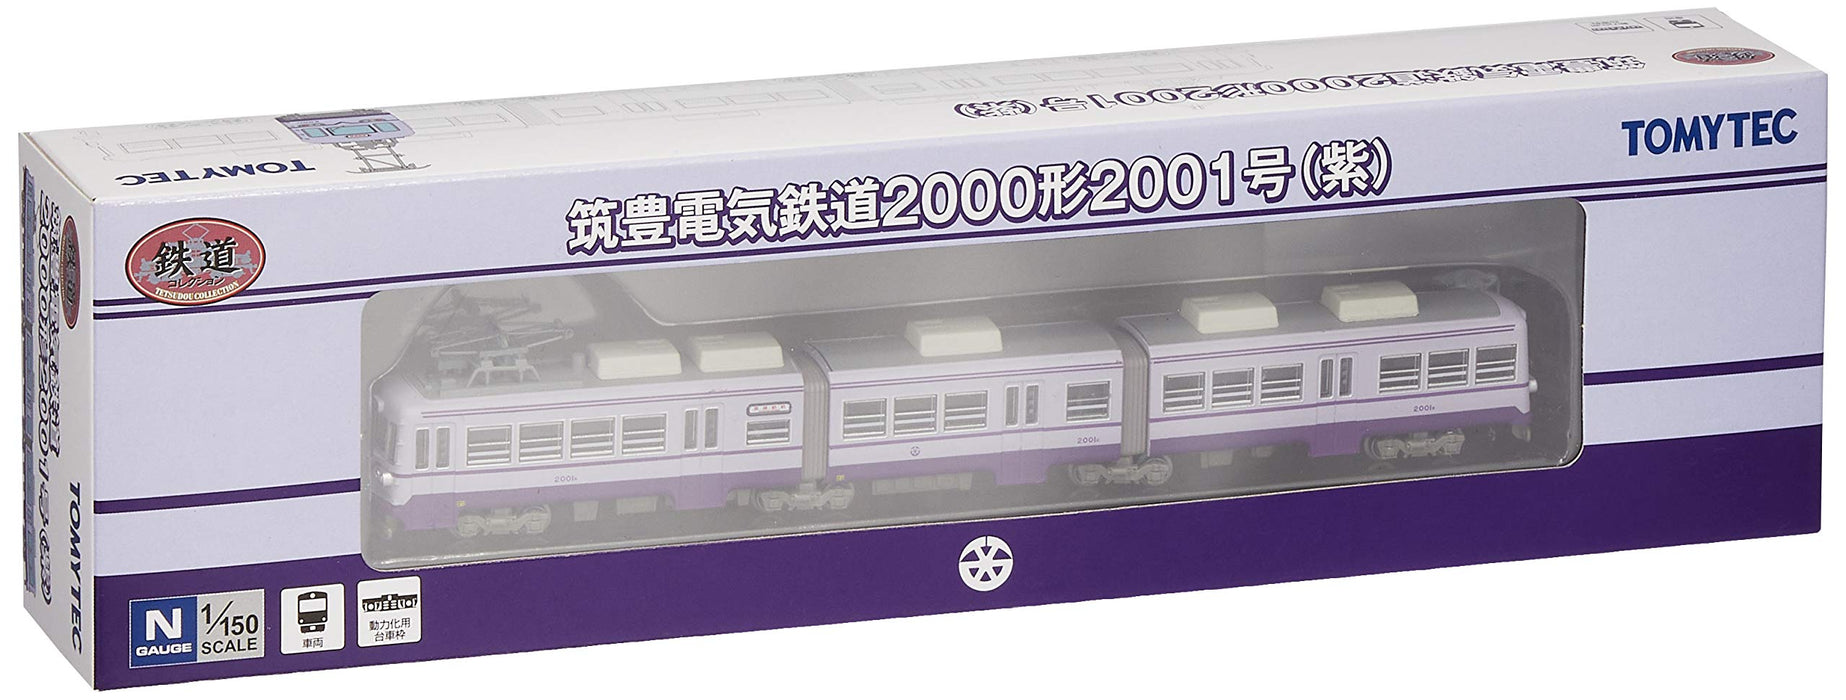 TOMYTEC Chikuho Electric Railway Type 2000 No.2001 Purple N Scale